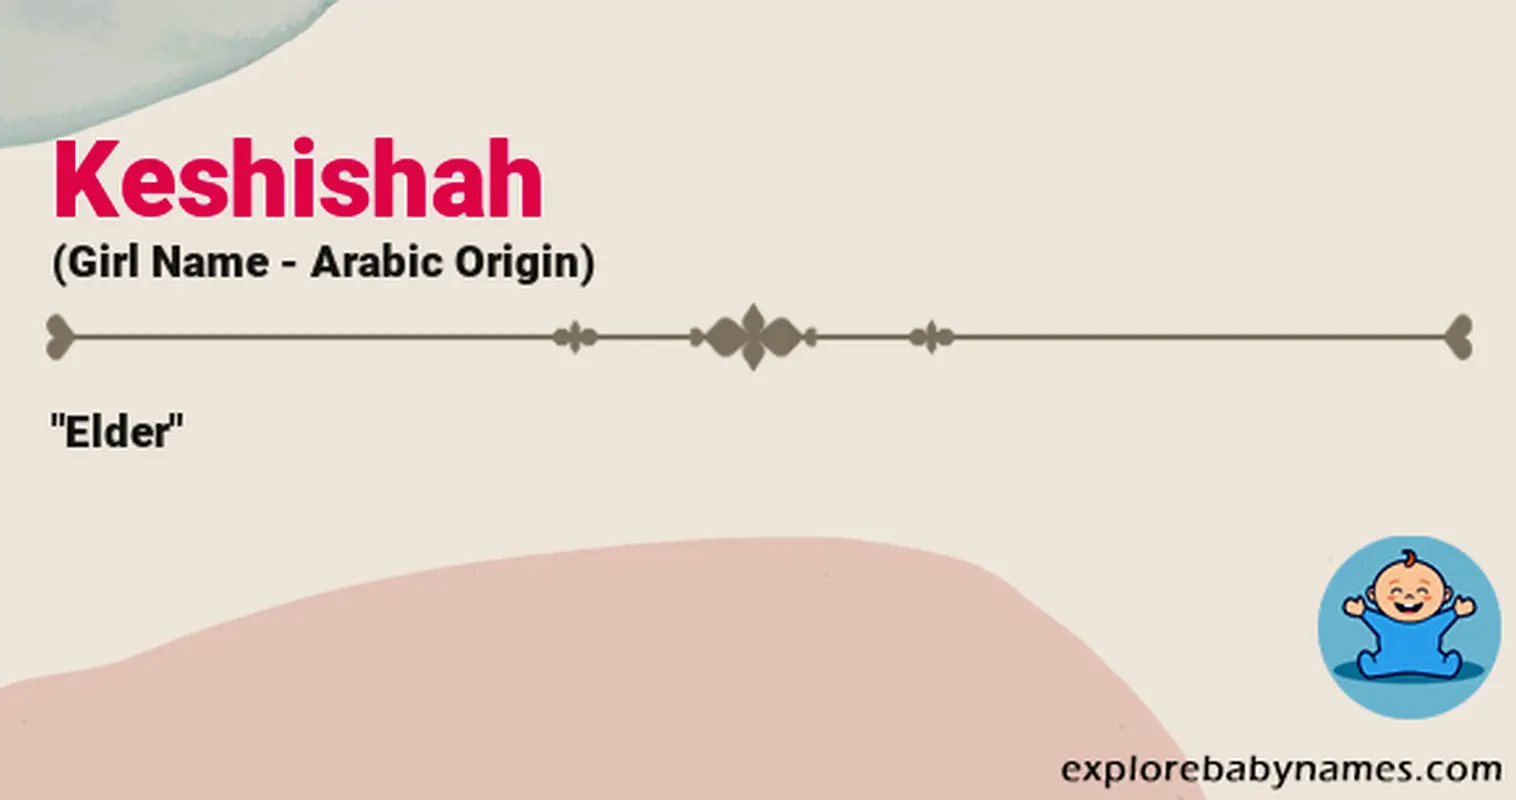 Meaning of Keshishah